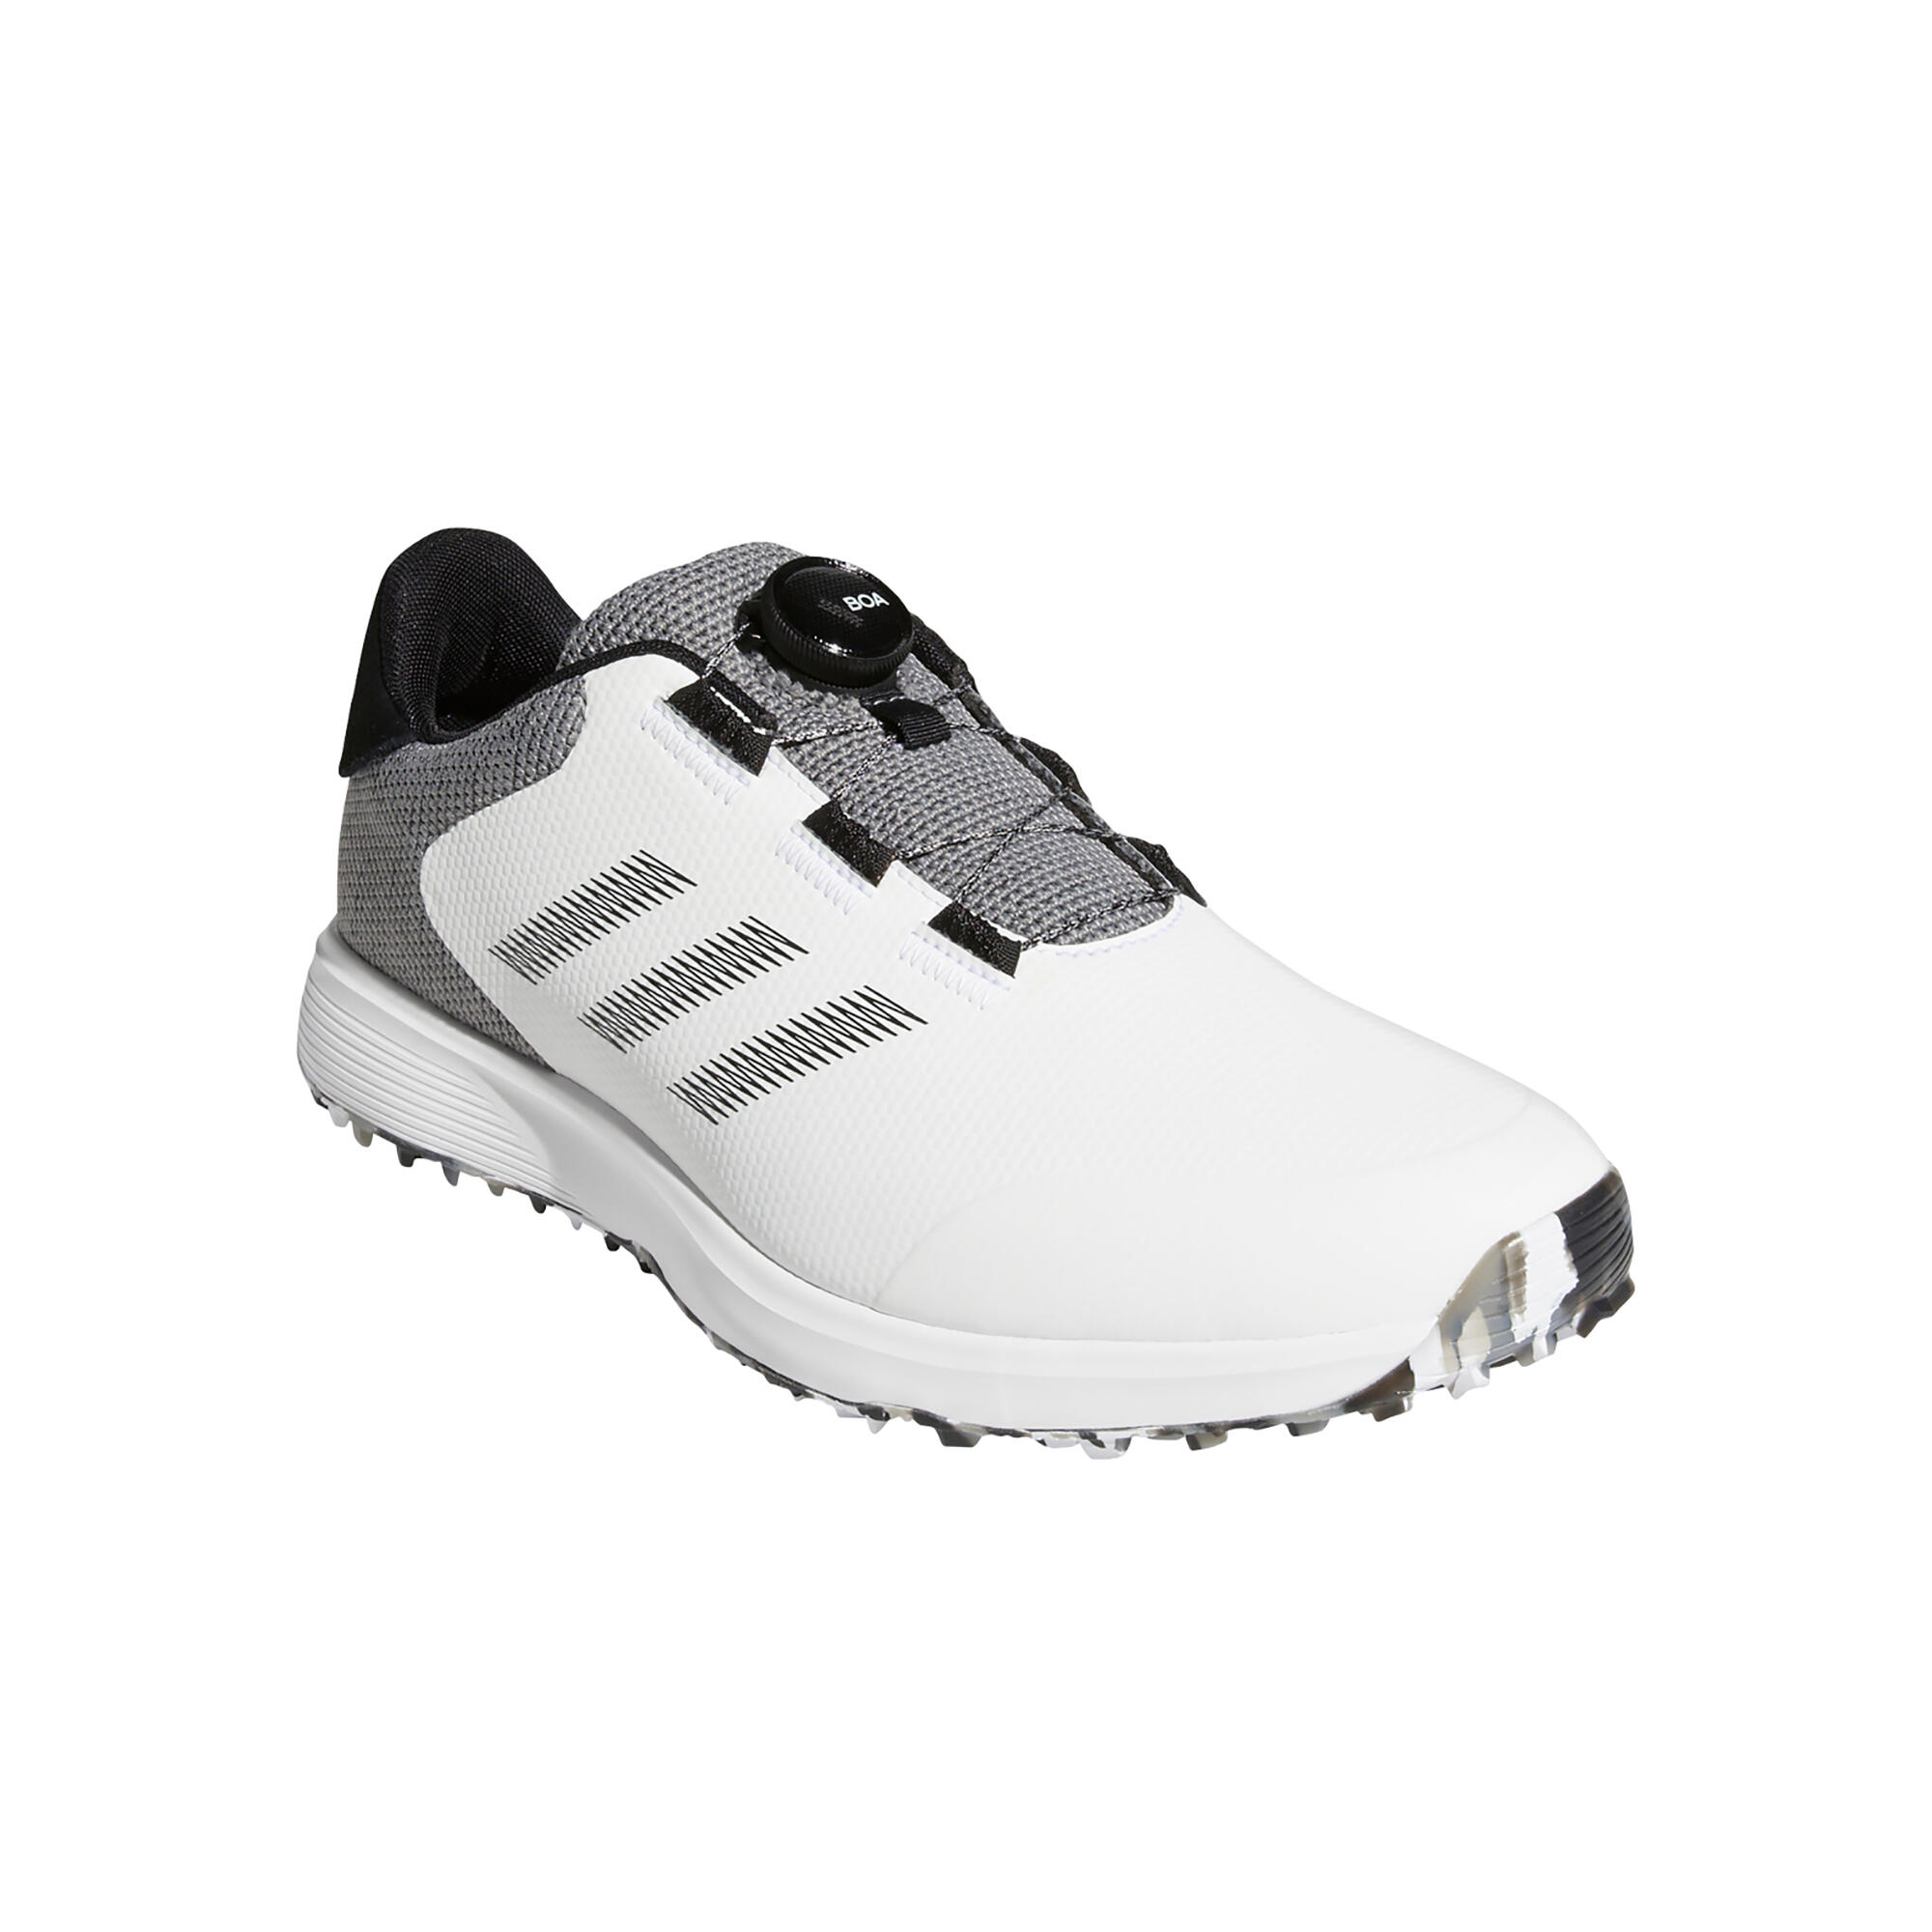 ADIDAS Men’s Waterproof Golf Shoes S2G SLBOA white